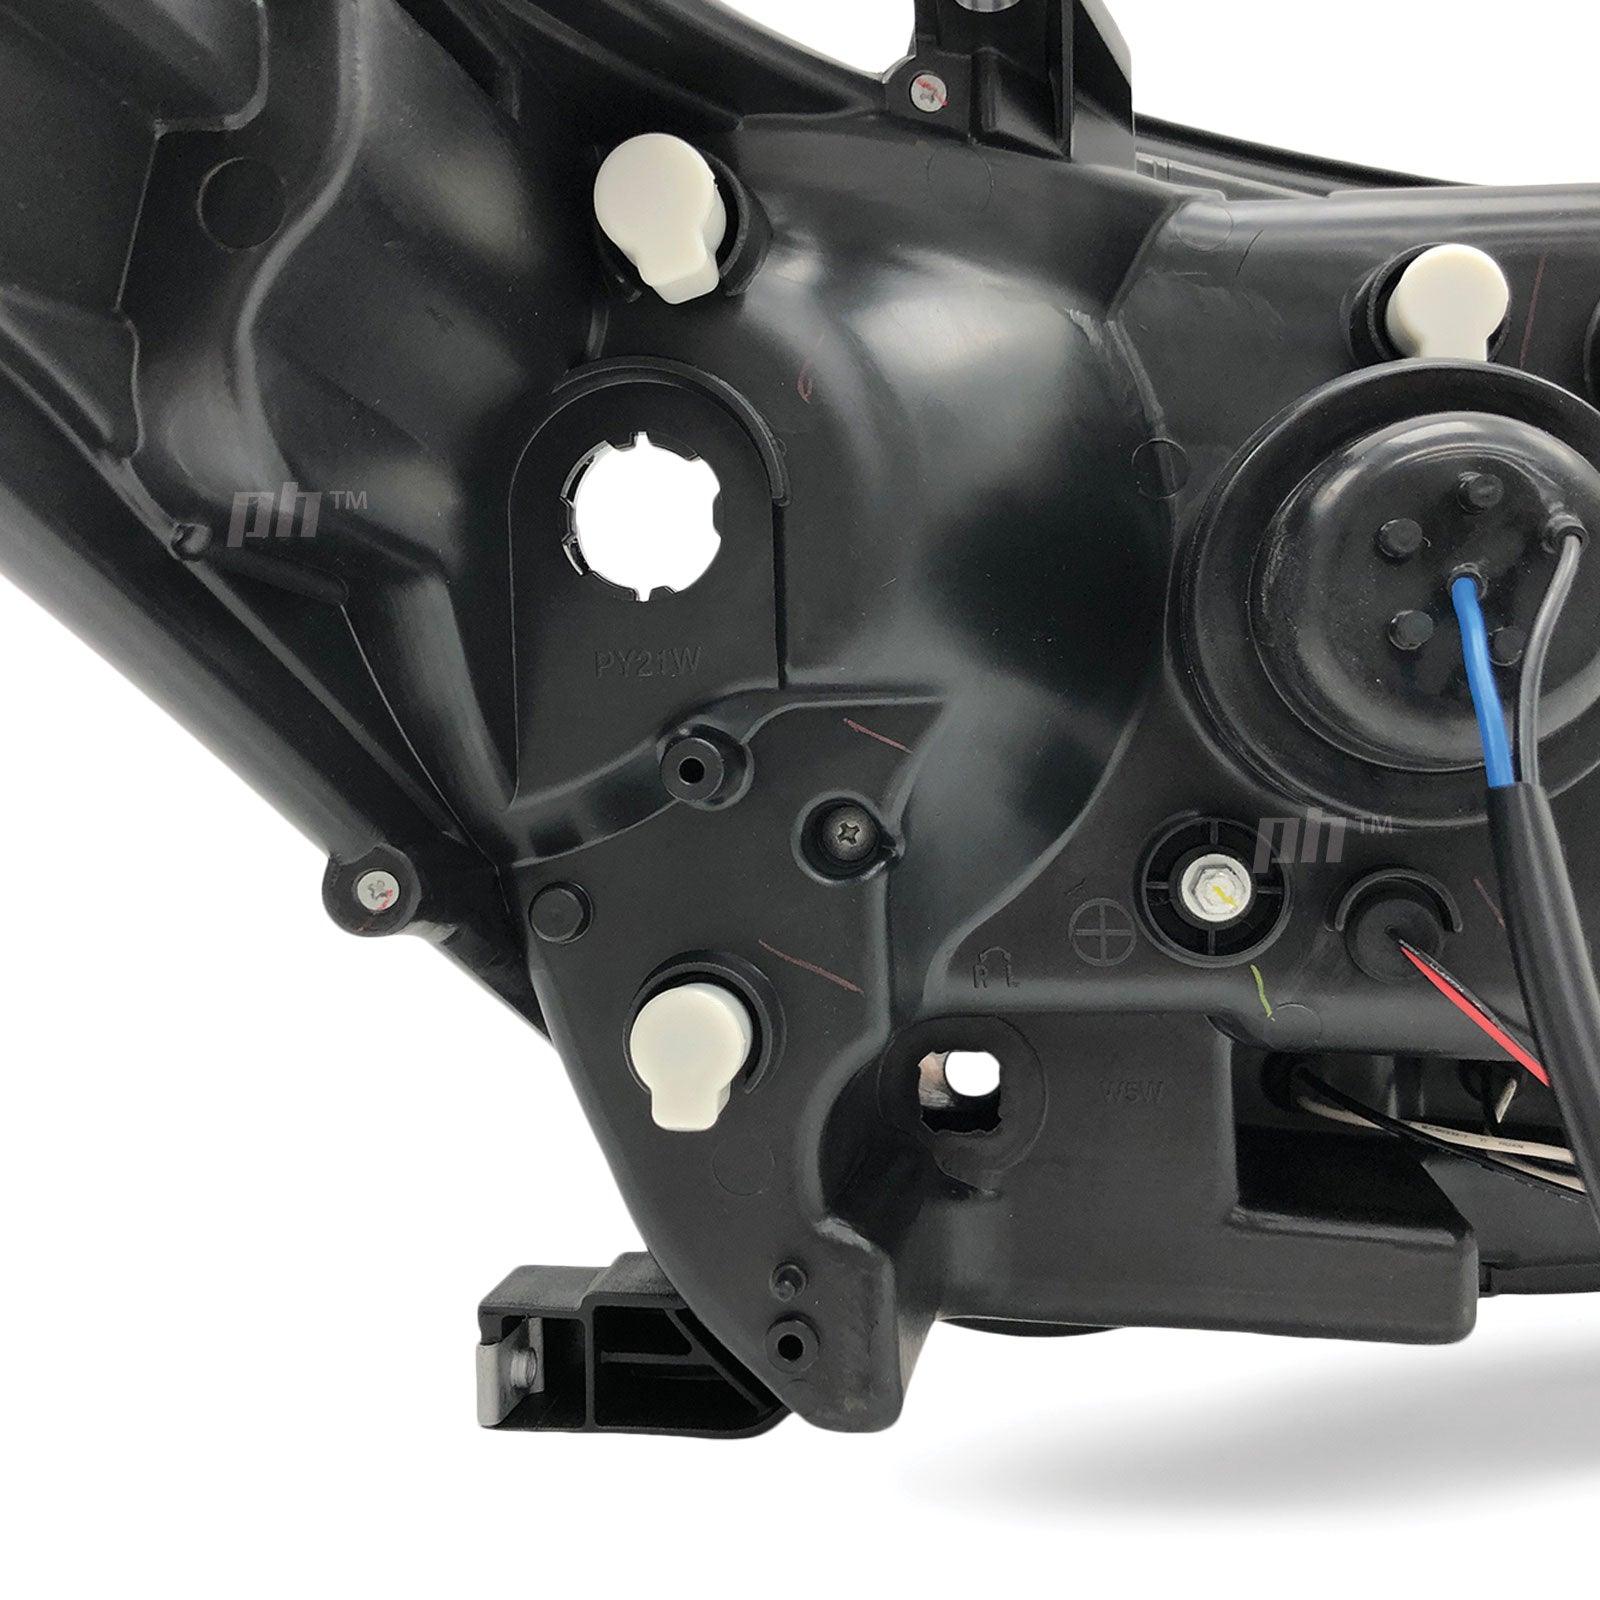 Headlights Angel Eye LED Halo DRL Black fits Toyota Landcruiser 200 Series 07-15 - 4X4OC™